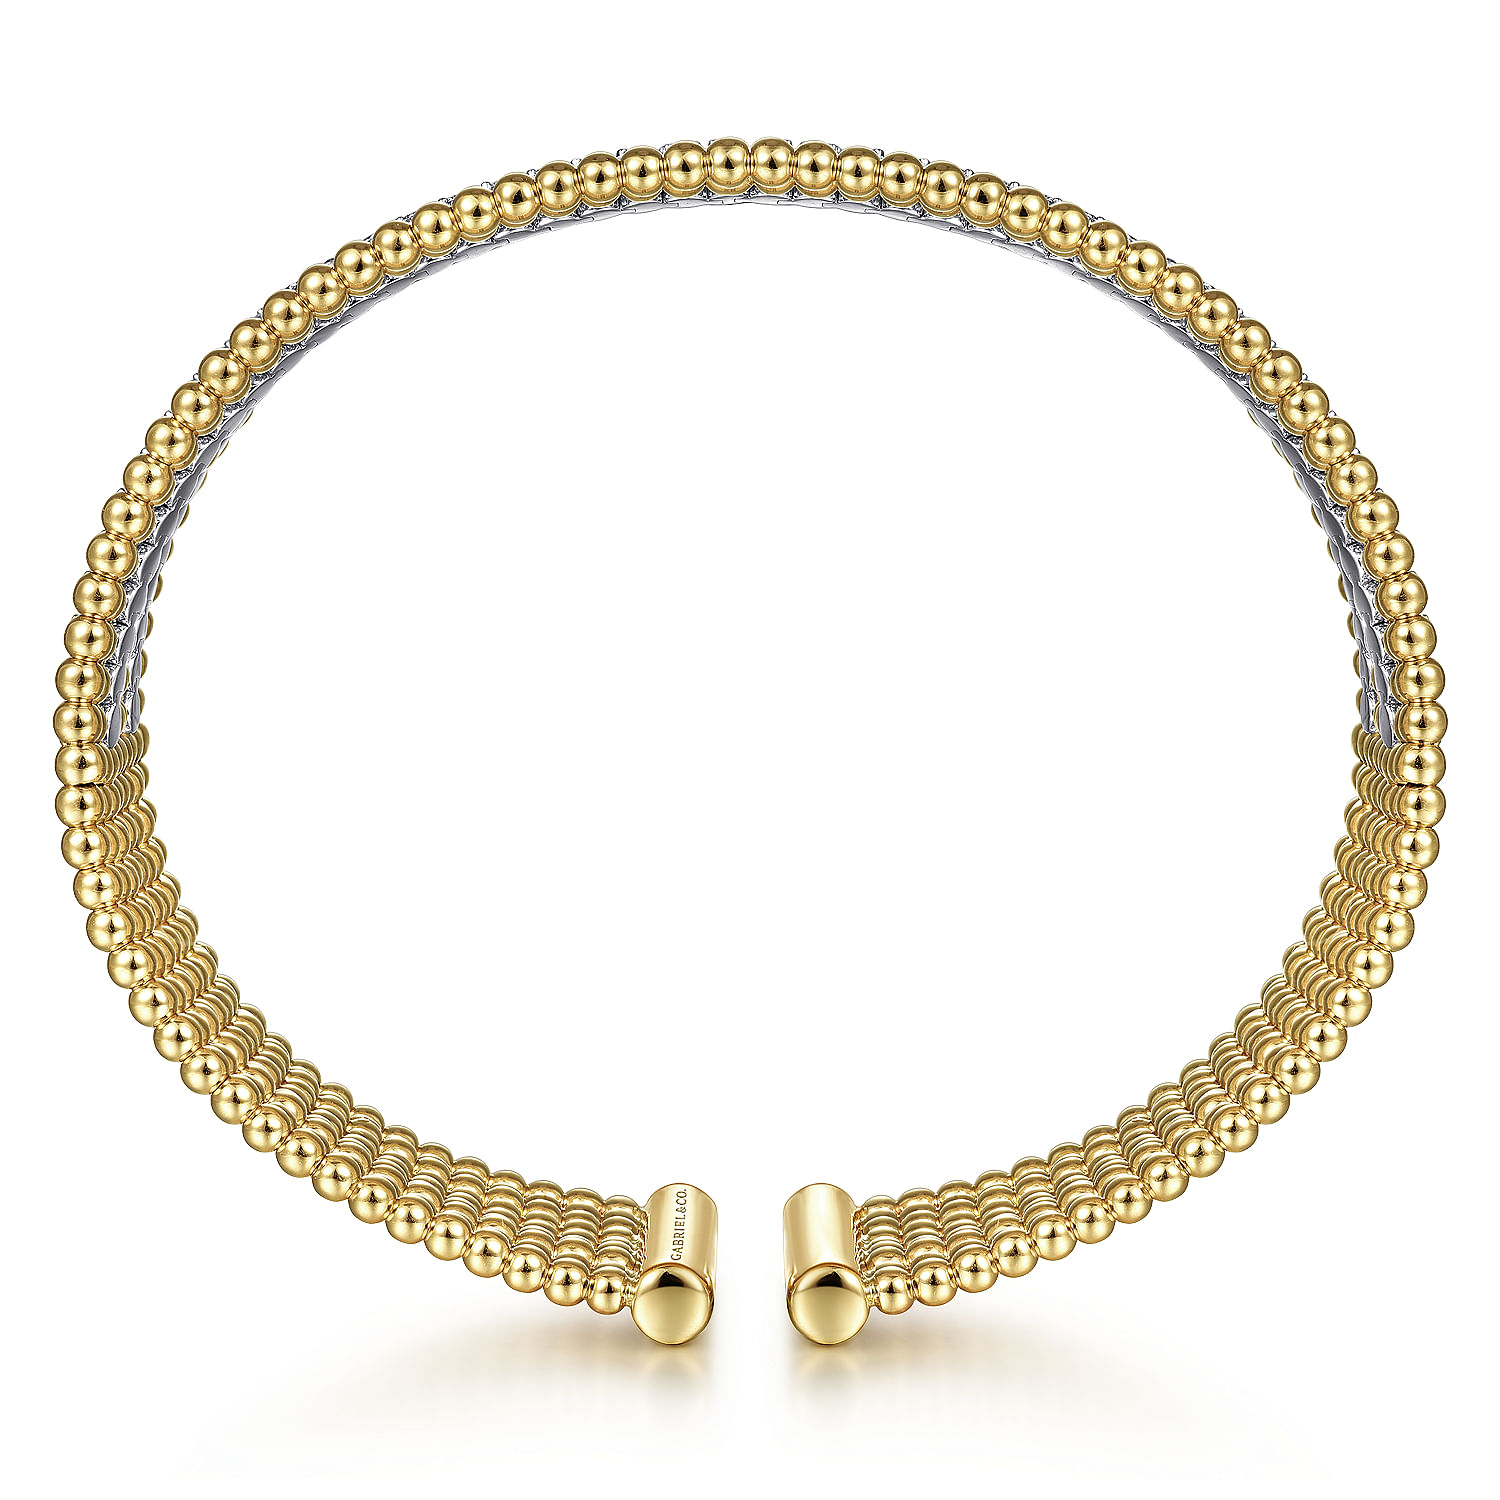 Wide 14K White-Yellow Gold Bujukan Bead Cuff Bracelet with Diamond Channels